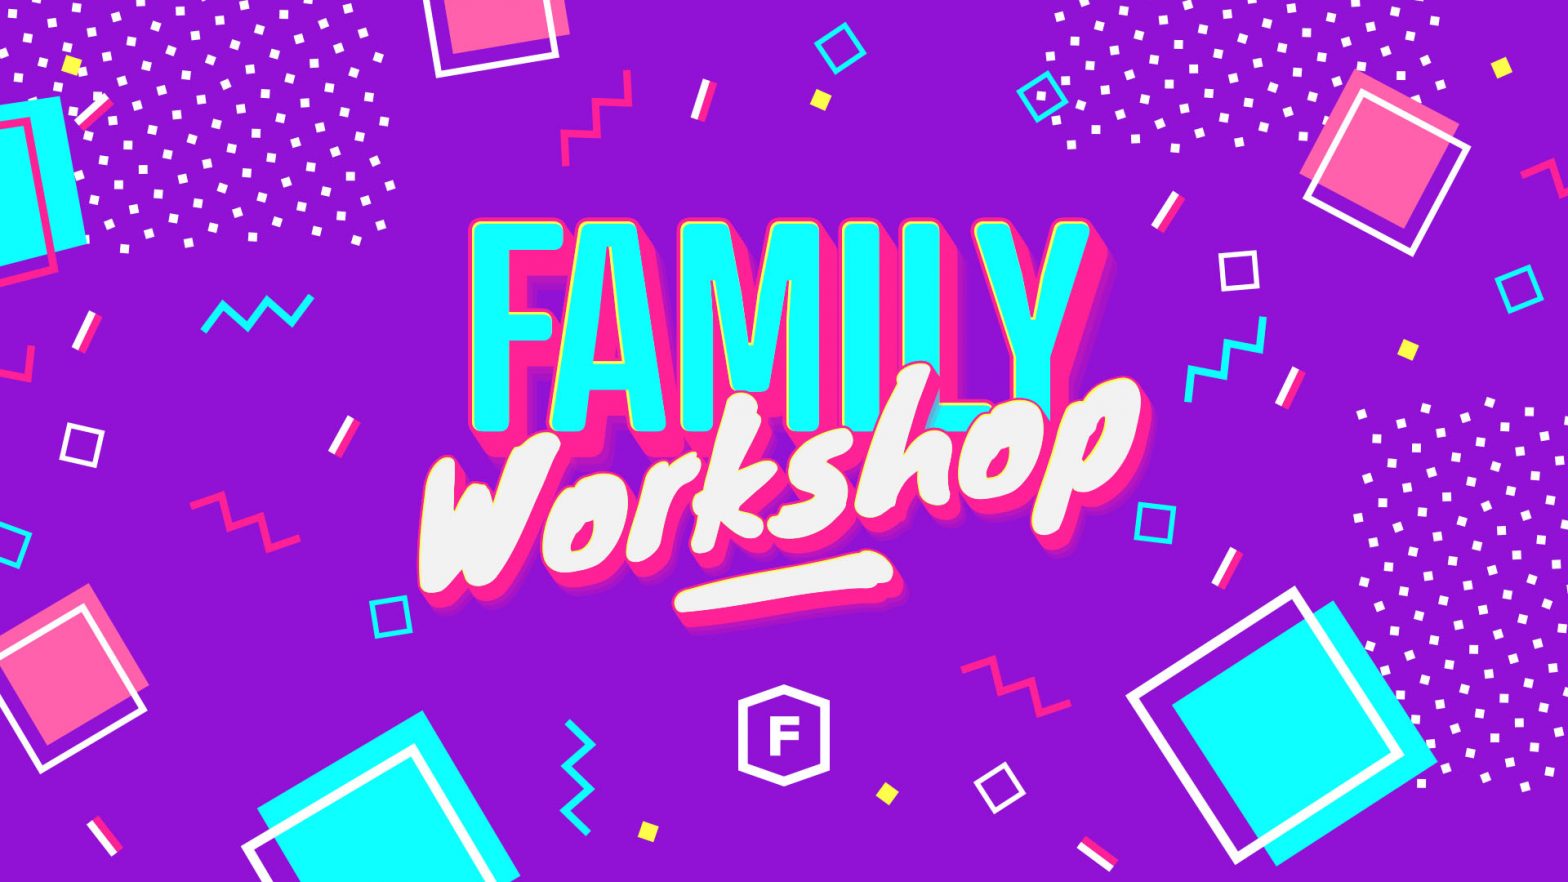 Family Workshop event image